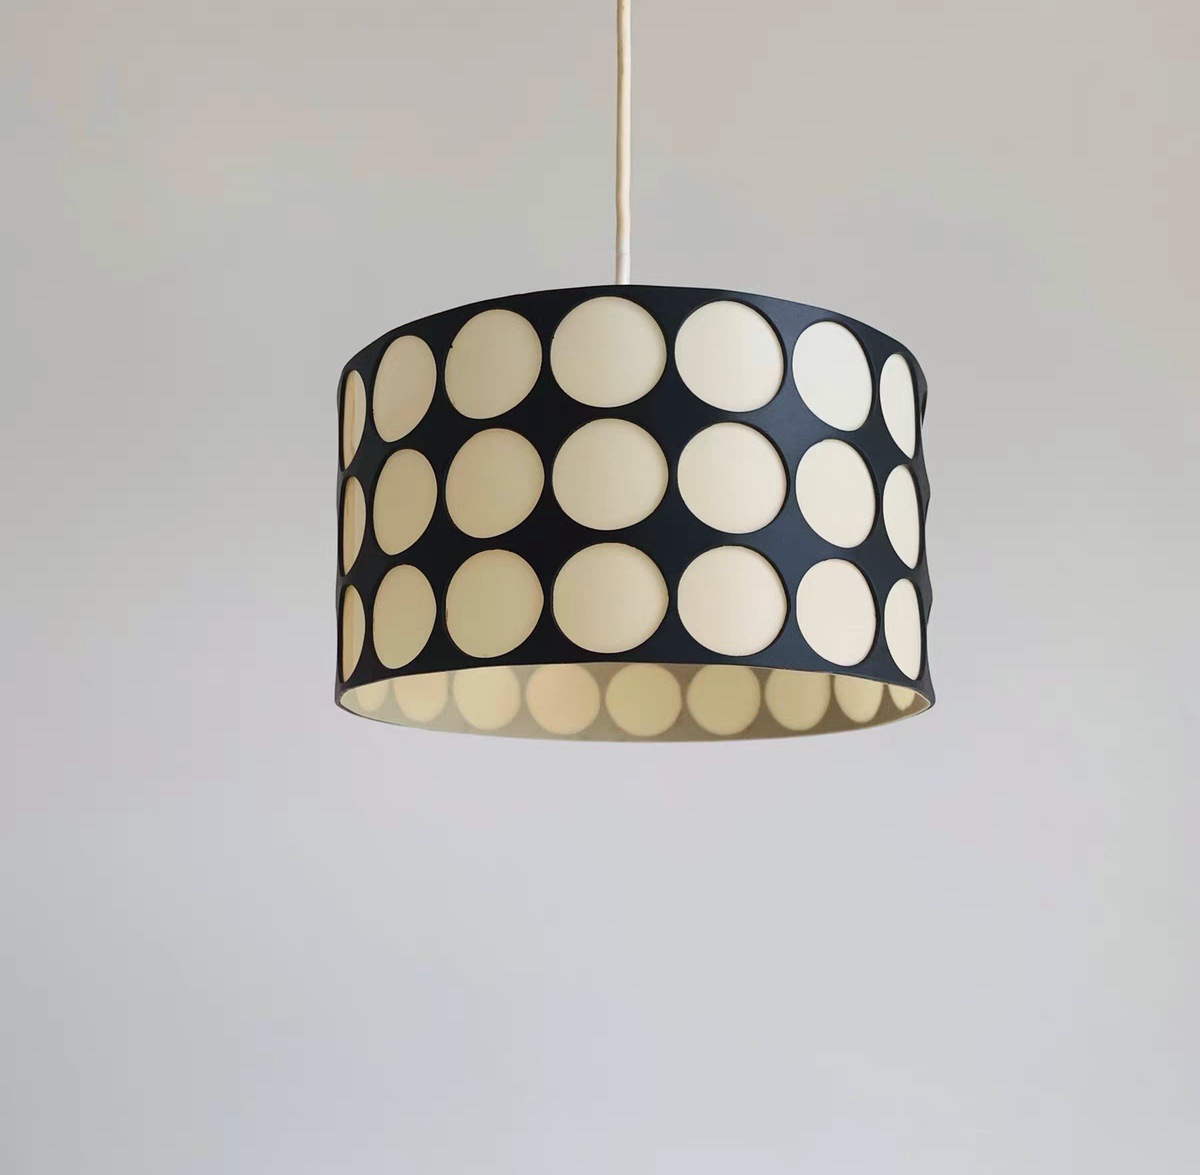 Vintage Paris Home decor Classic Black and White Polka Dots Pendant Lamp